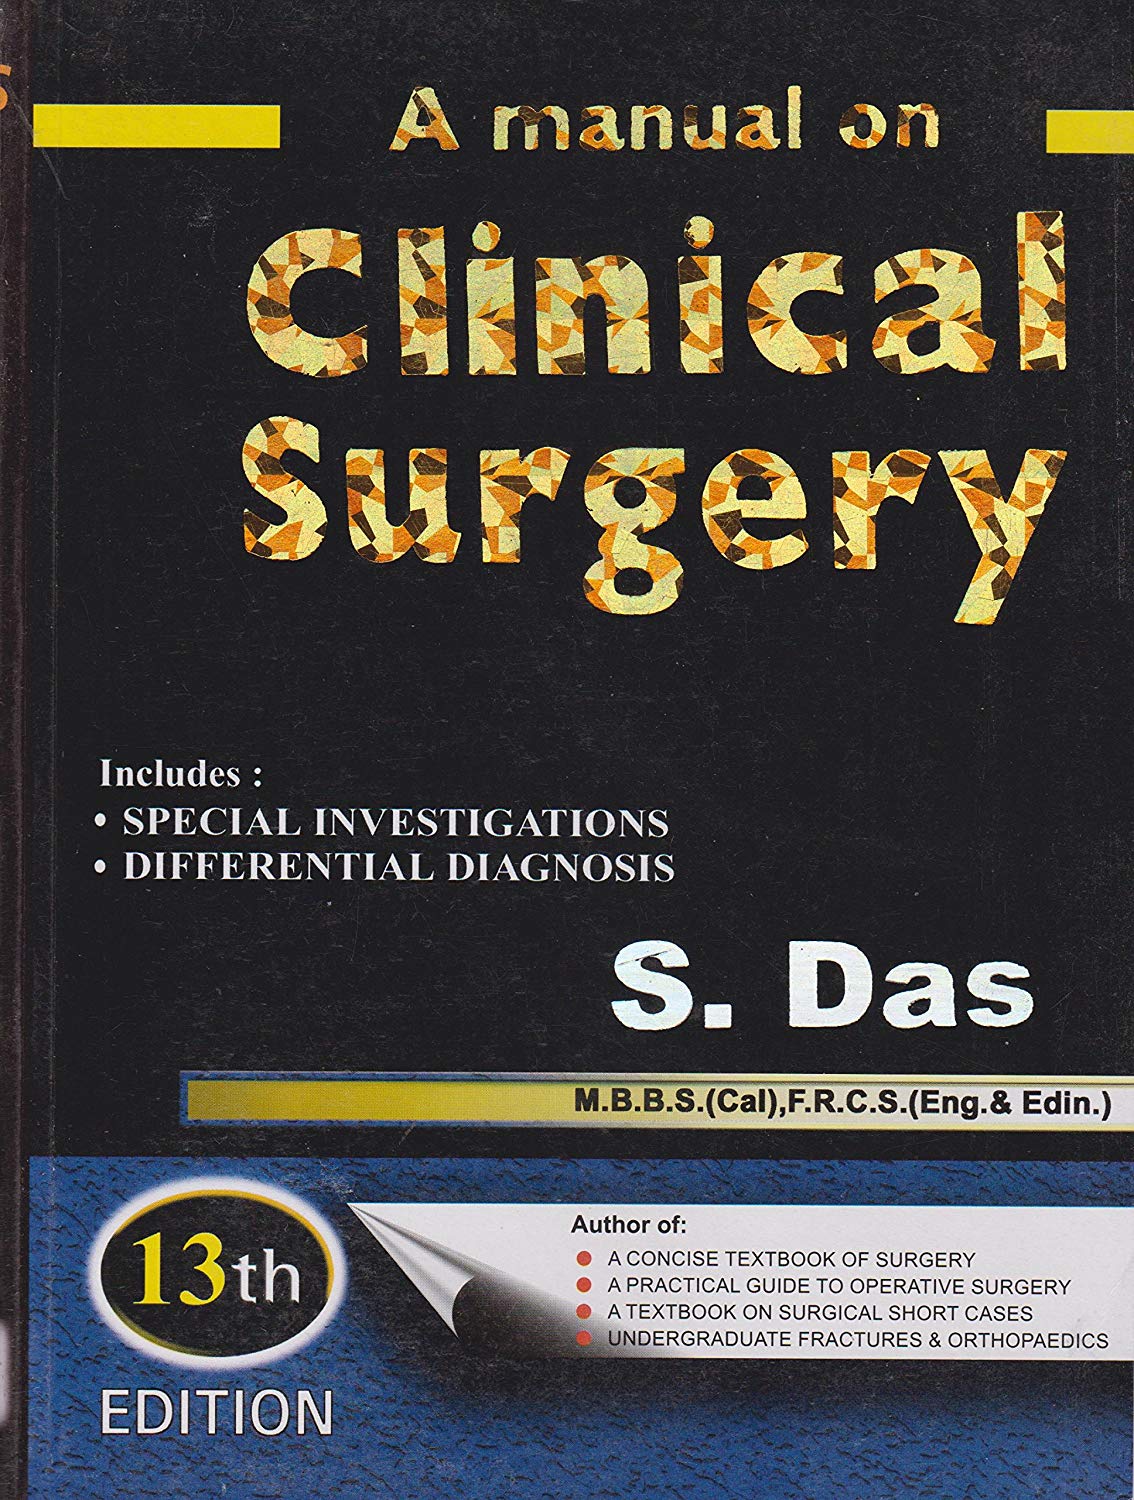 S.Das Manual on Clinical Surgery